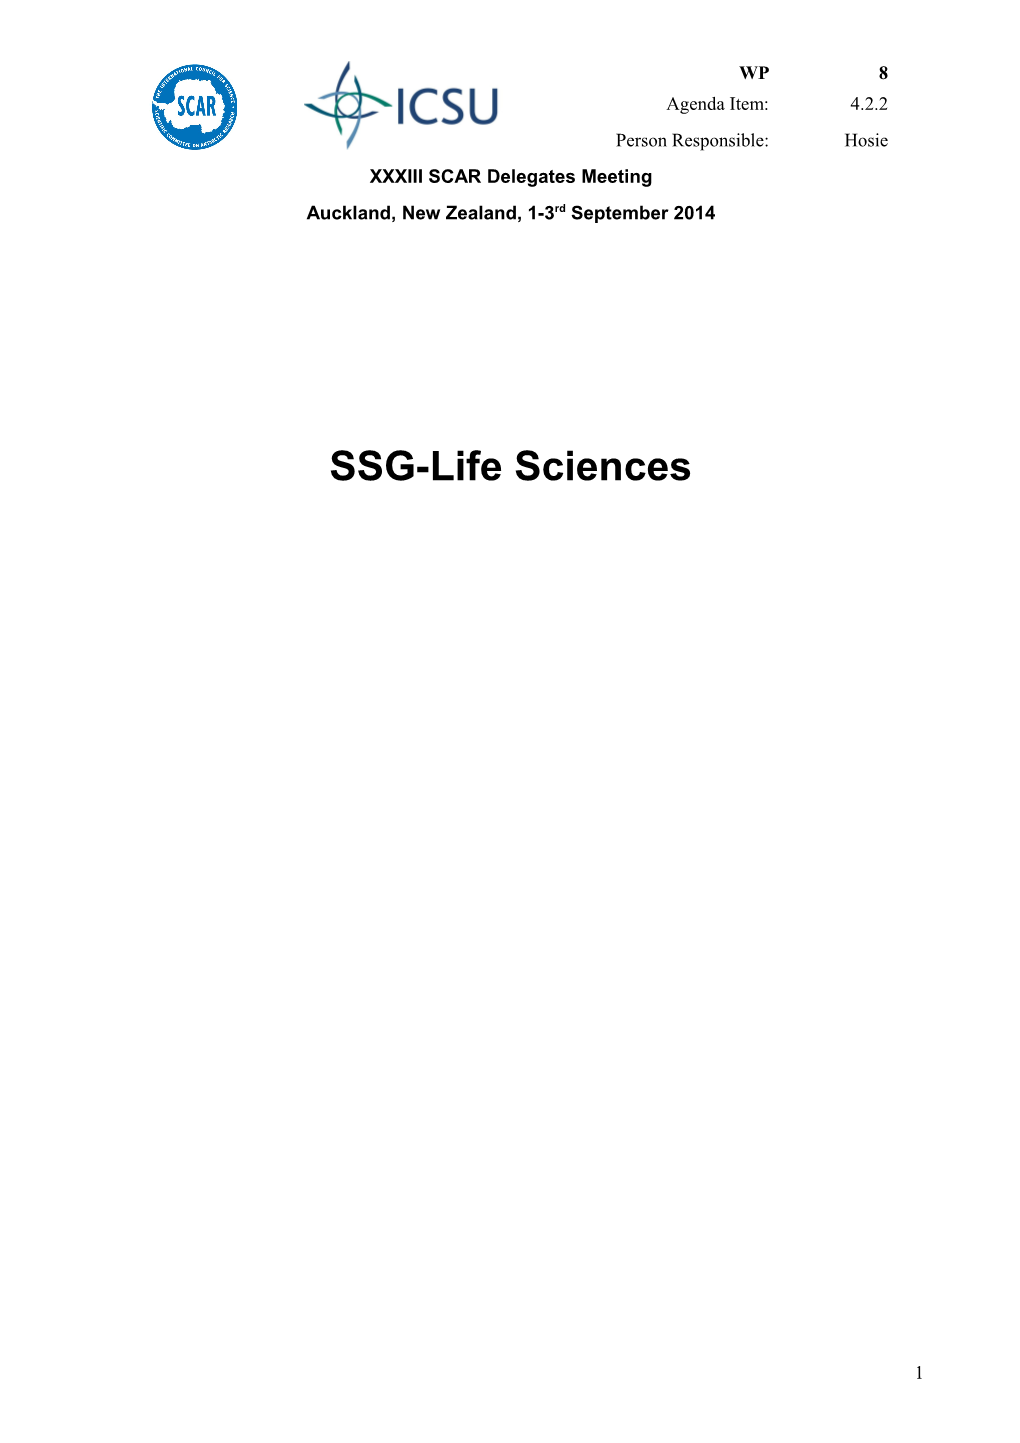 SSG-Life Sciences